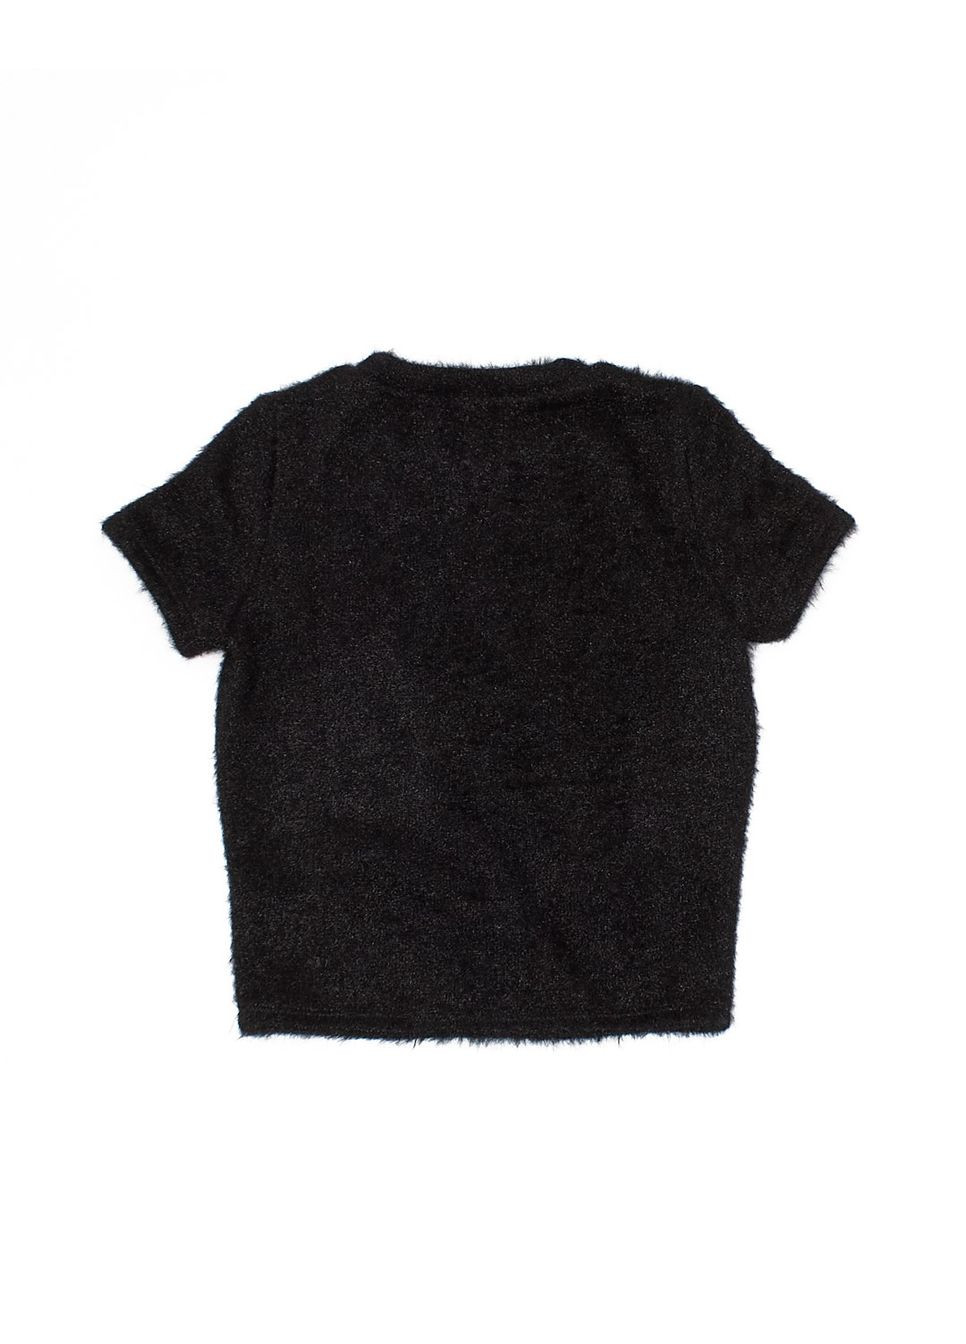 Черная футболка пл.материал,черный,pimkie No Brand